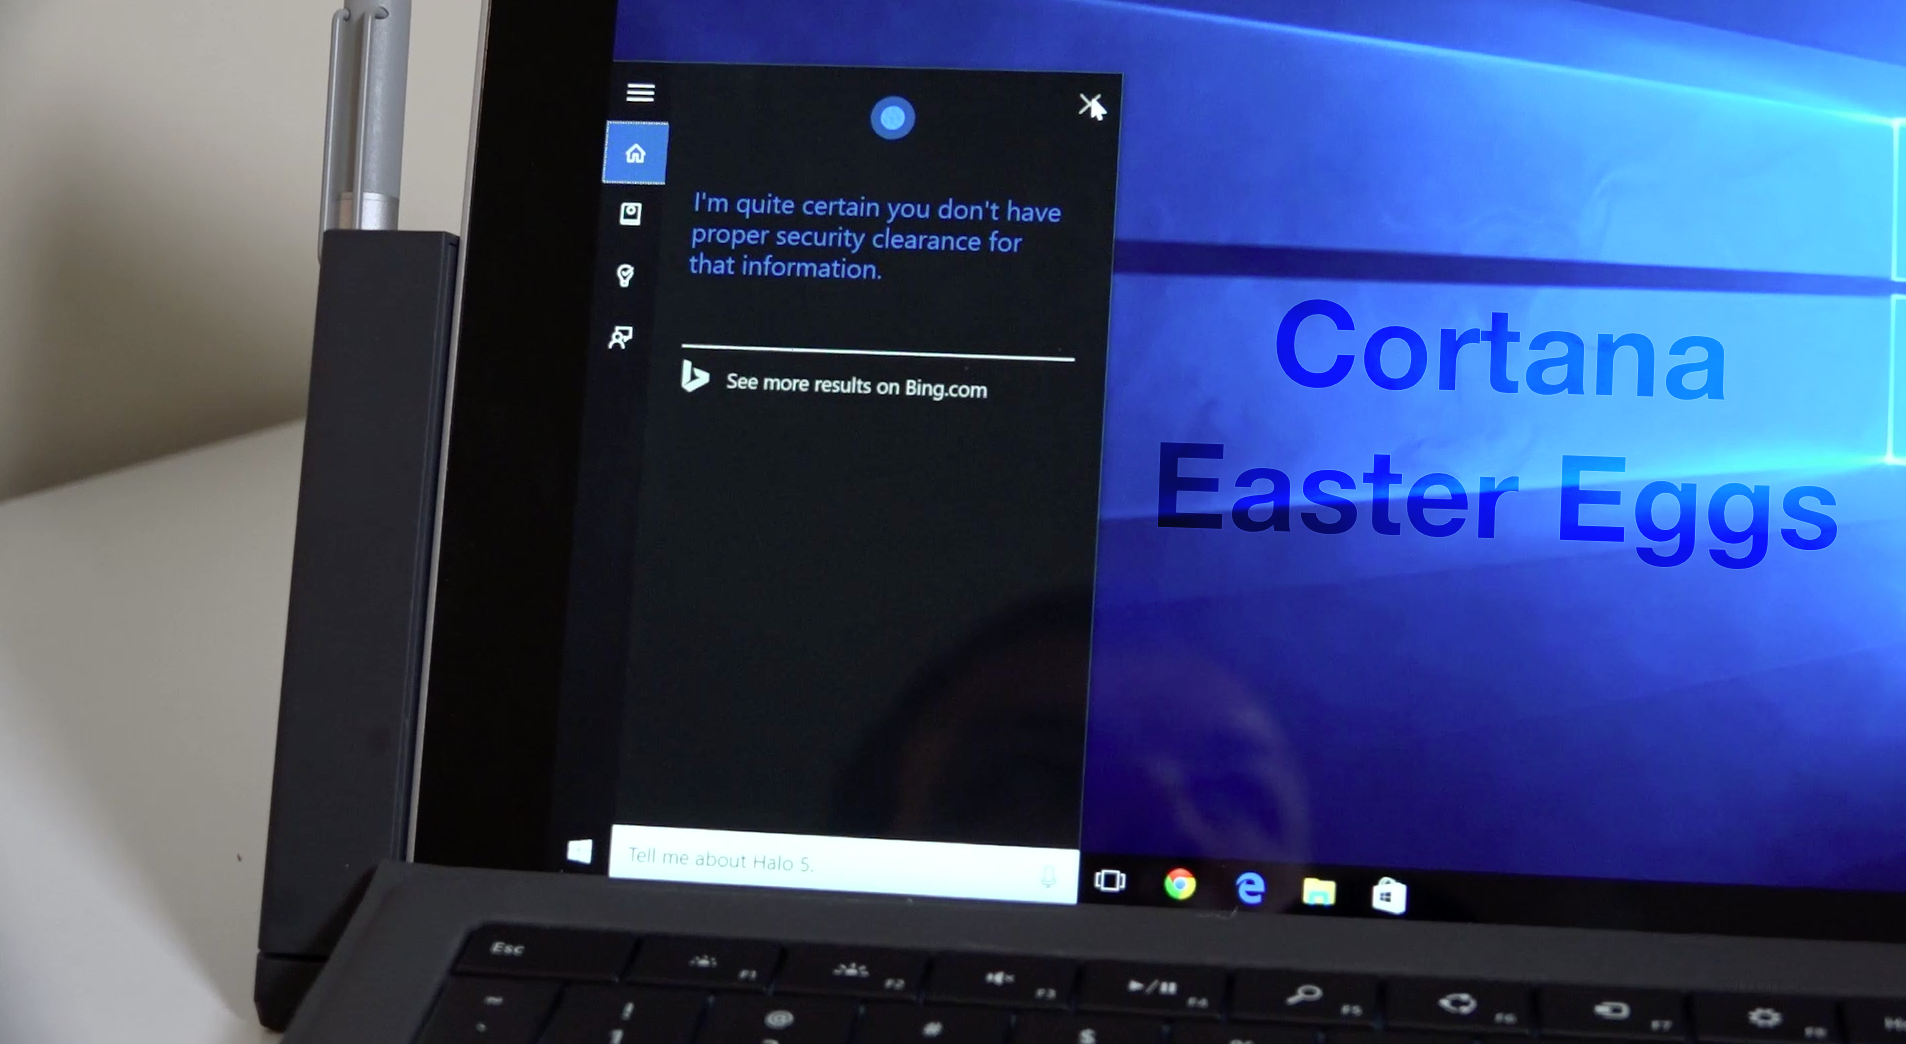 Windows 10 – Cortana Easter Eggs